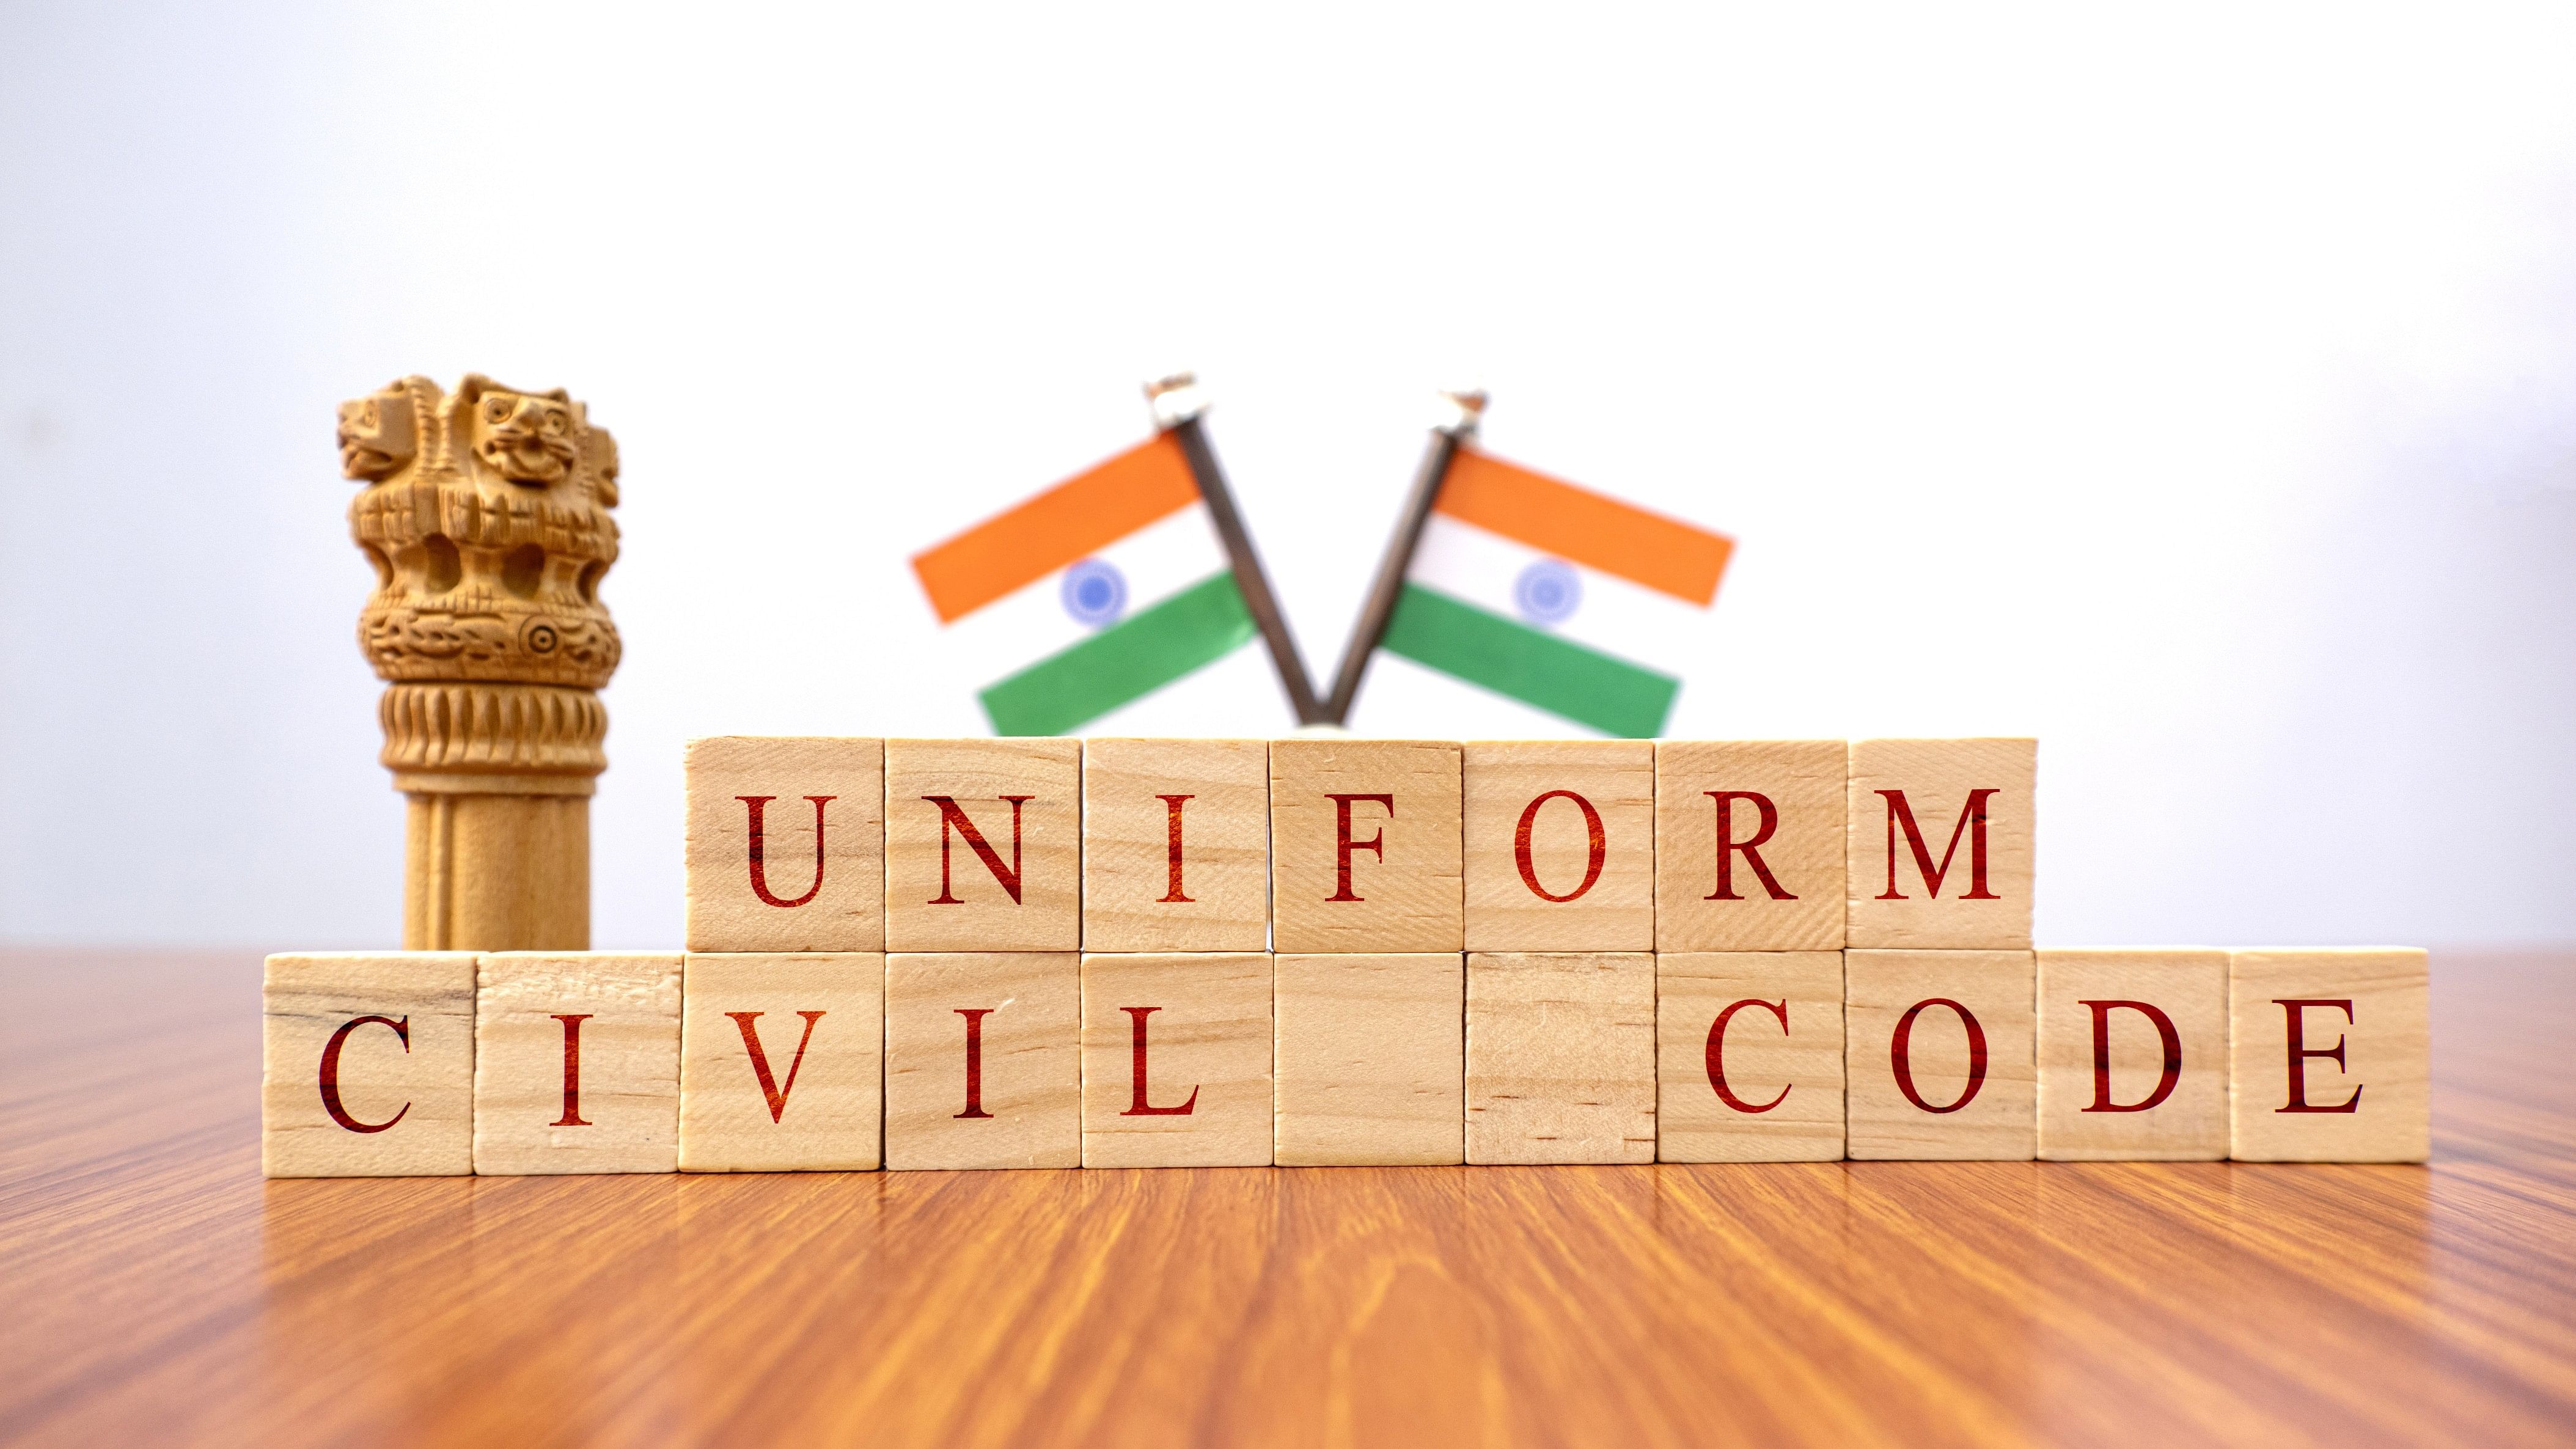 <div class="paragraphs"><p>Reprsentative image indicating Uniform Civil Code.</p></div>